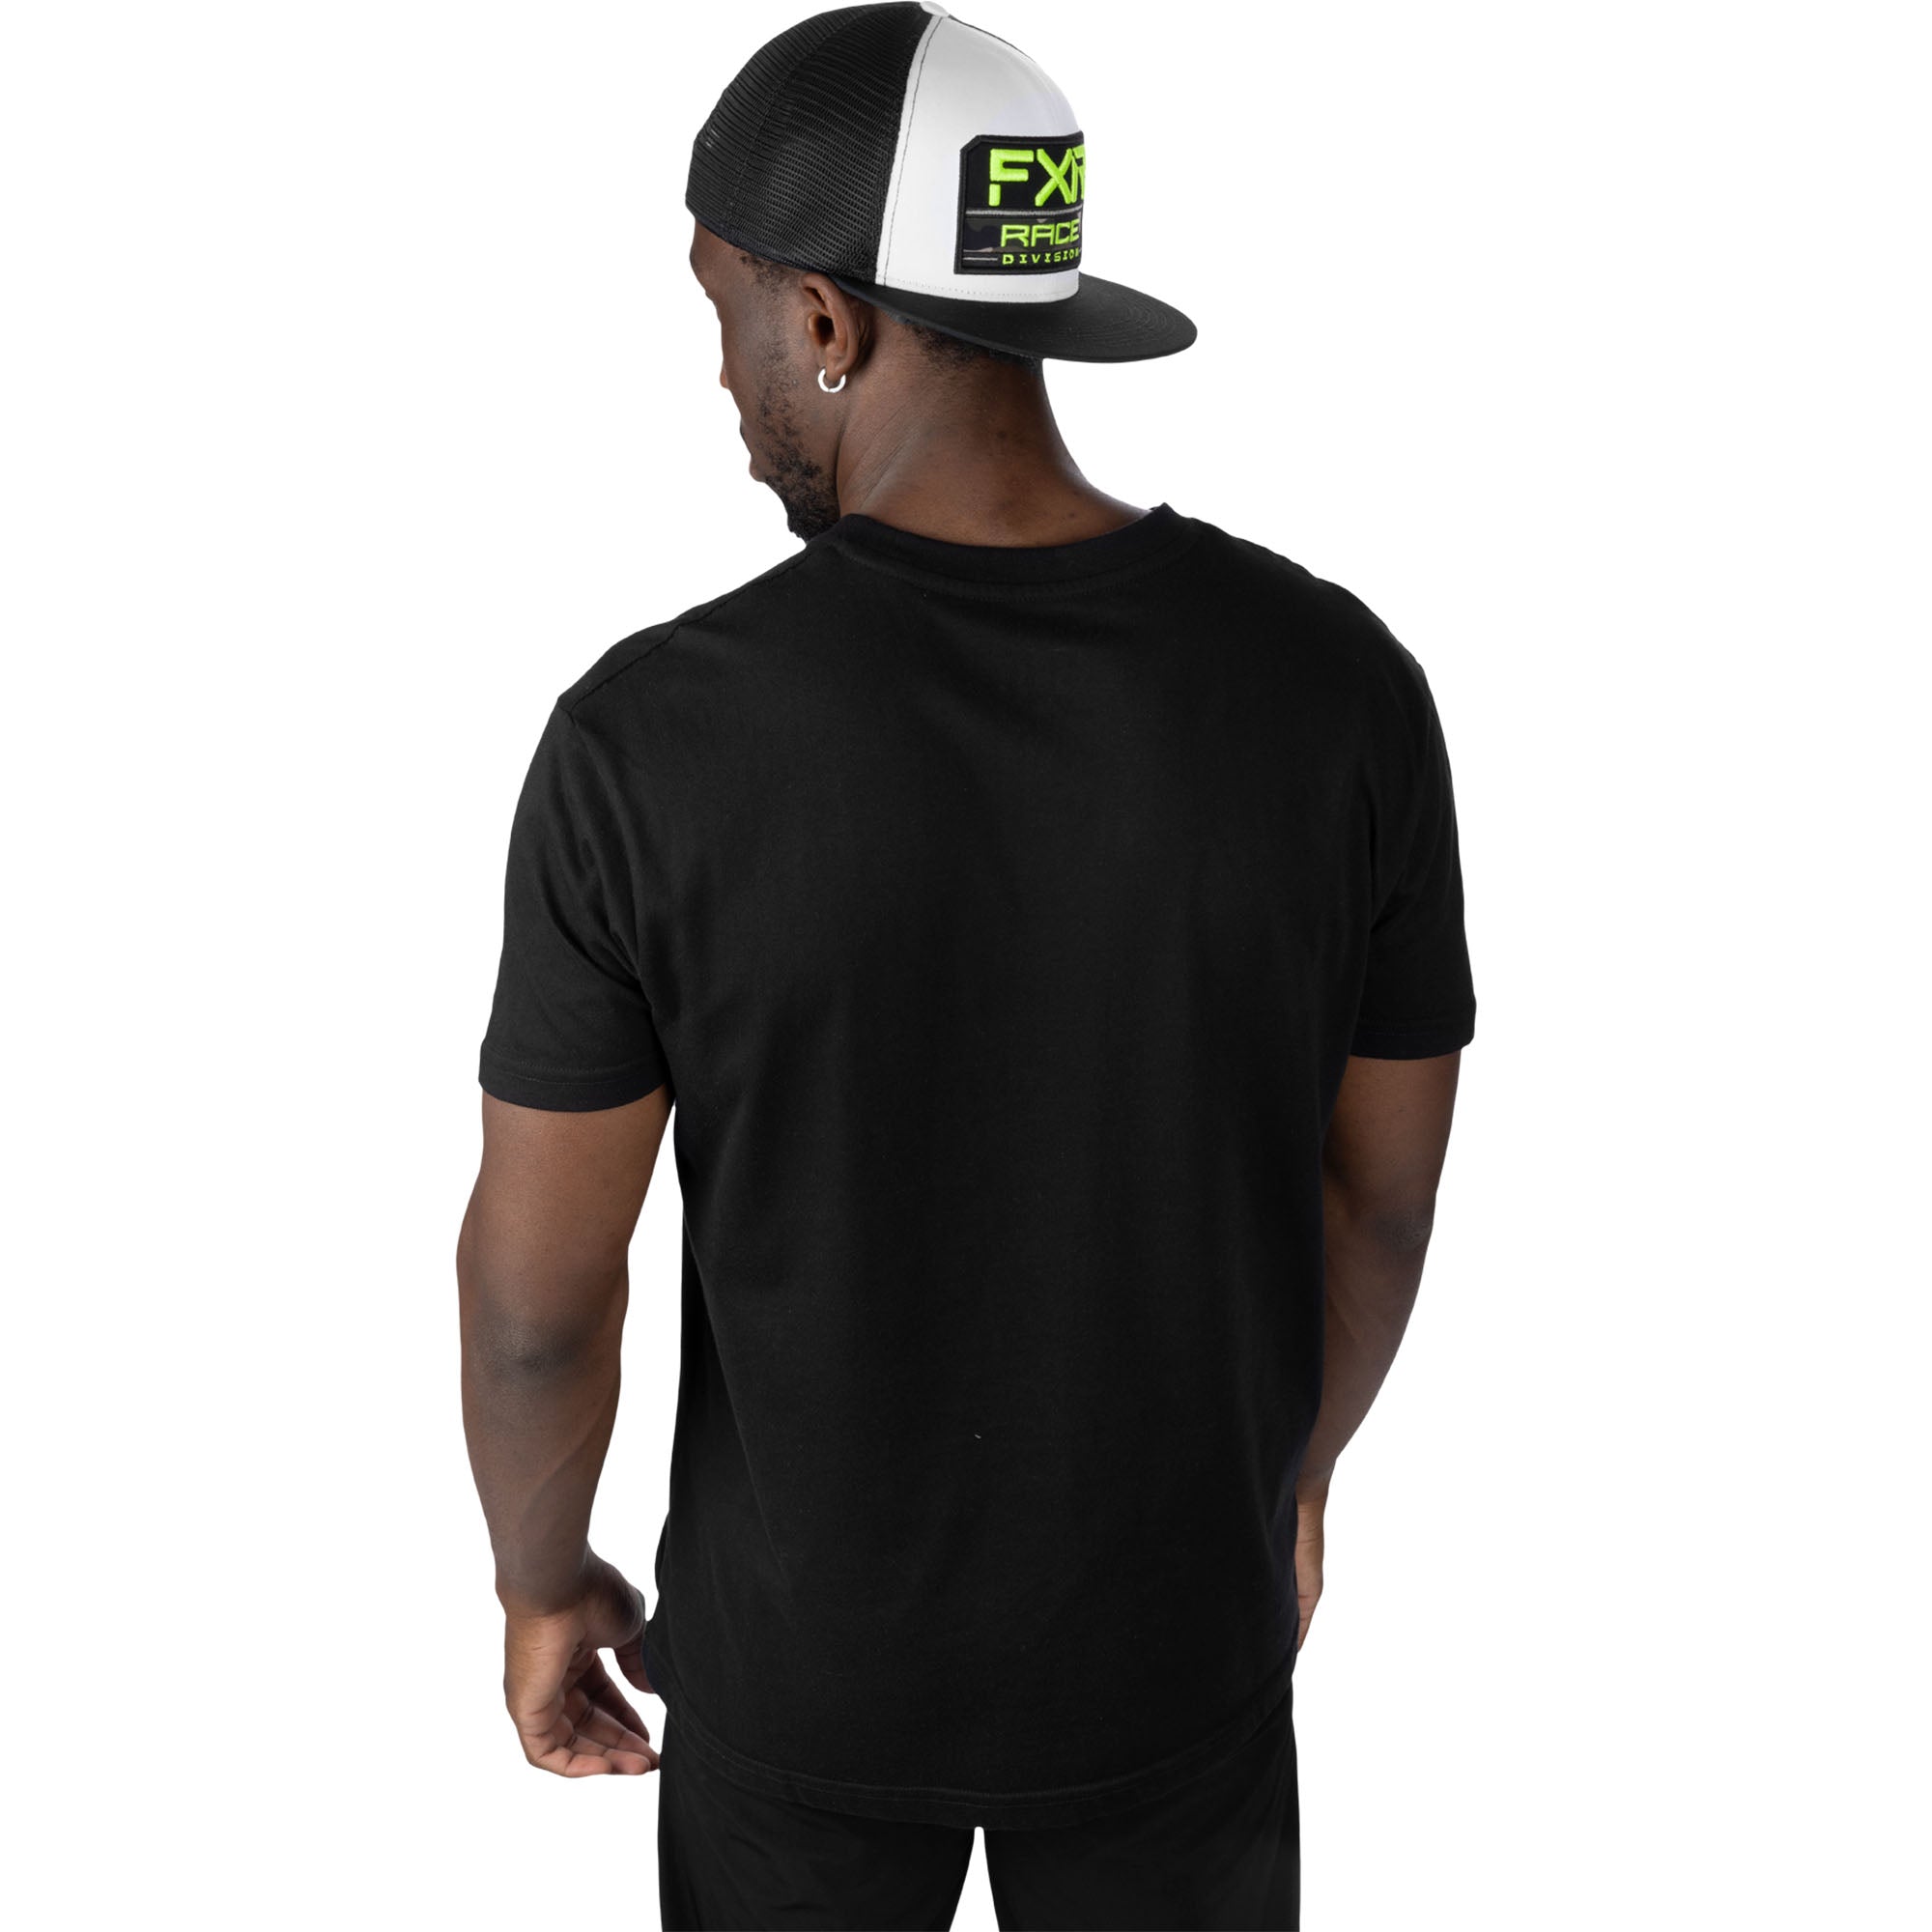 FXR  Youth Race Div Baseball Hat Cap Nylon Mesh Snap-Back Flat Brim Casual - One Size